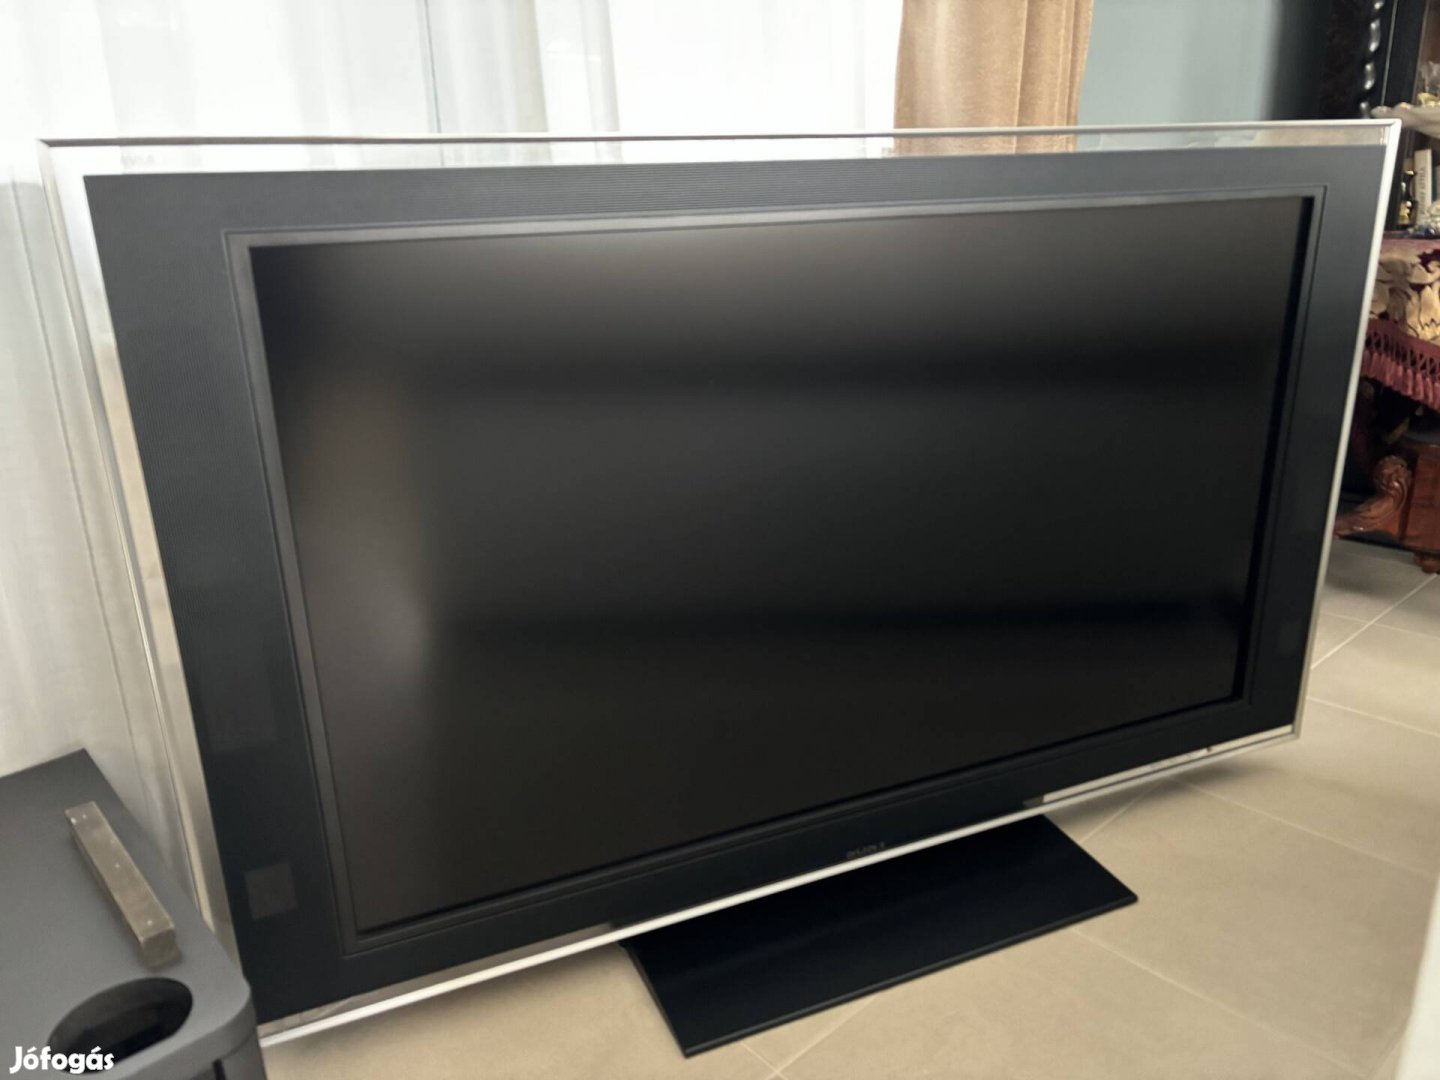 Sony Bravia Kdl-52x2000 LCD Full HD TV Eladó